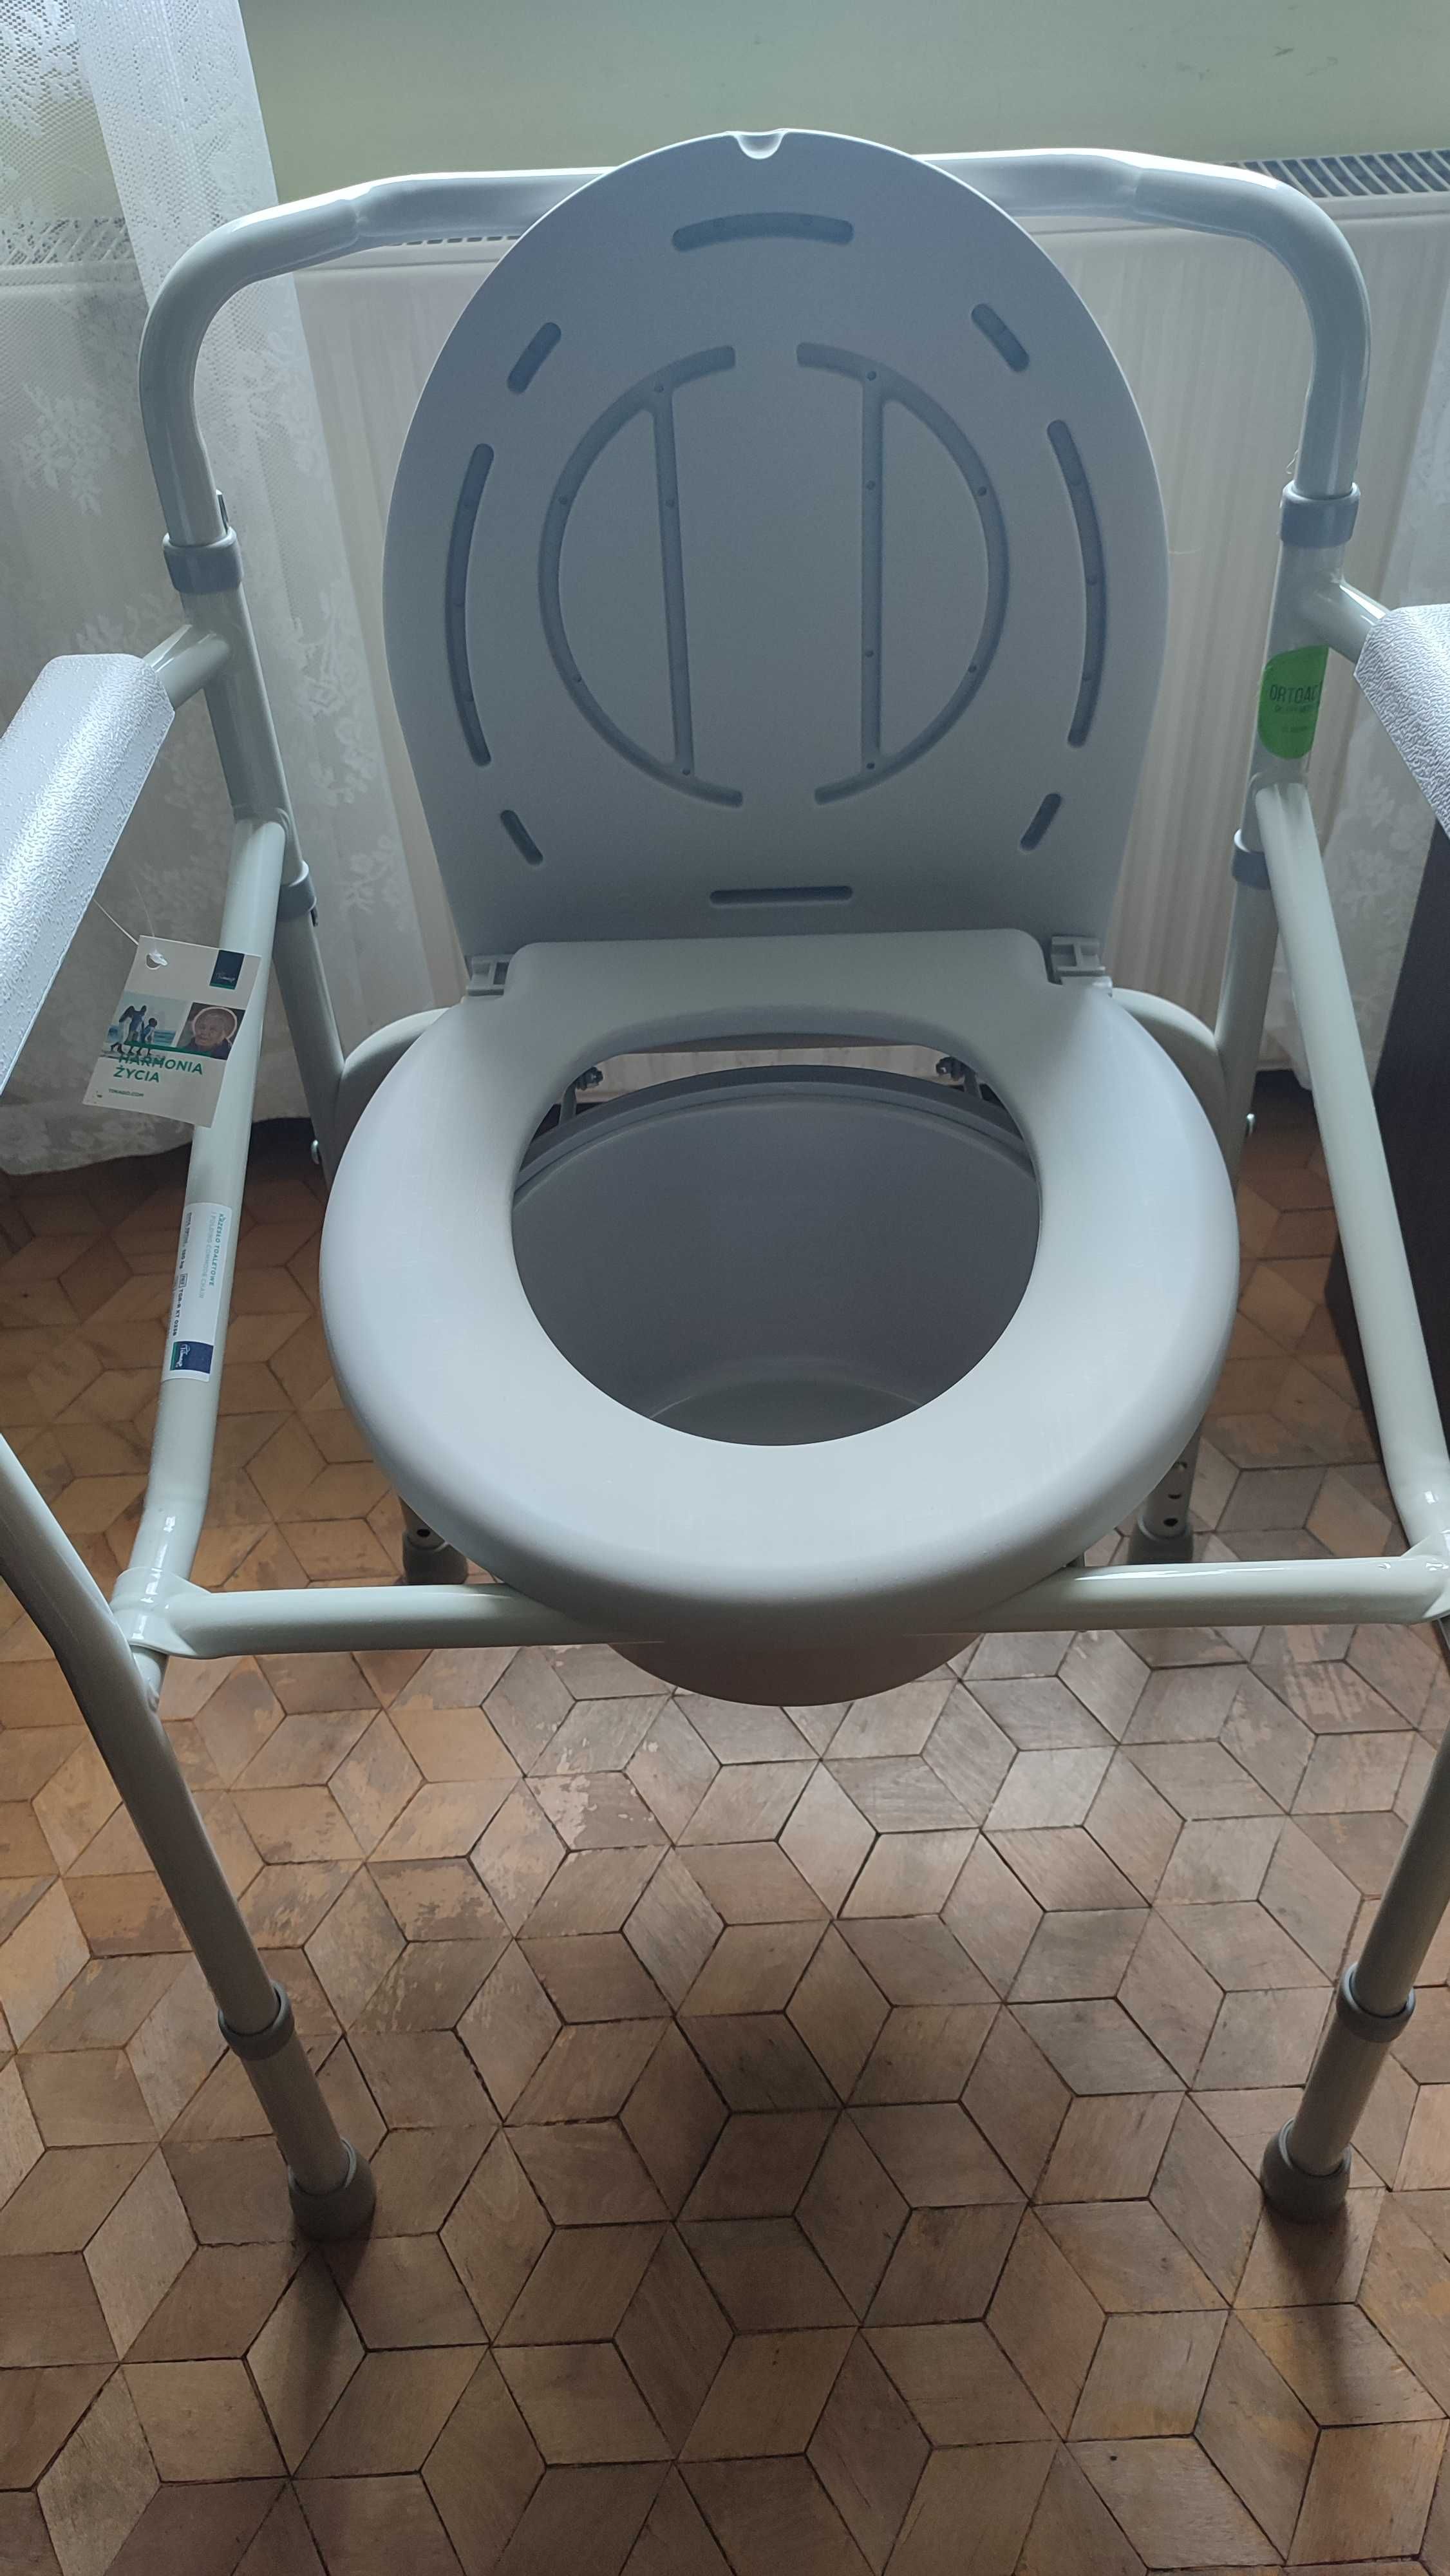 Krzesło toaletowe Timago nowe Opole